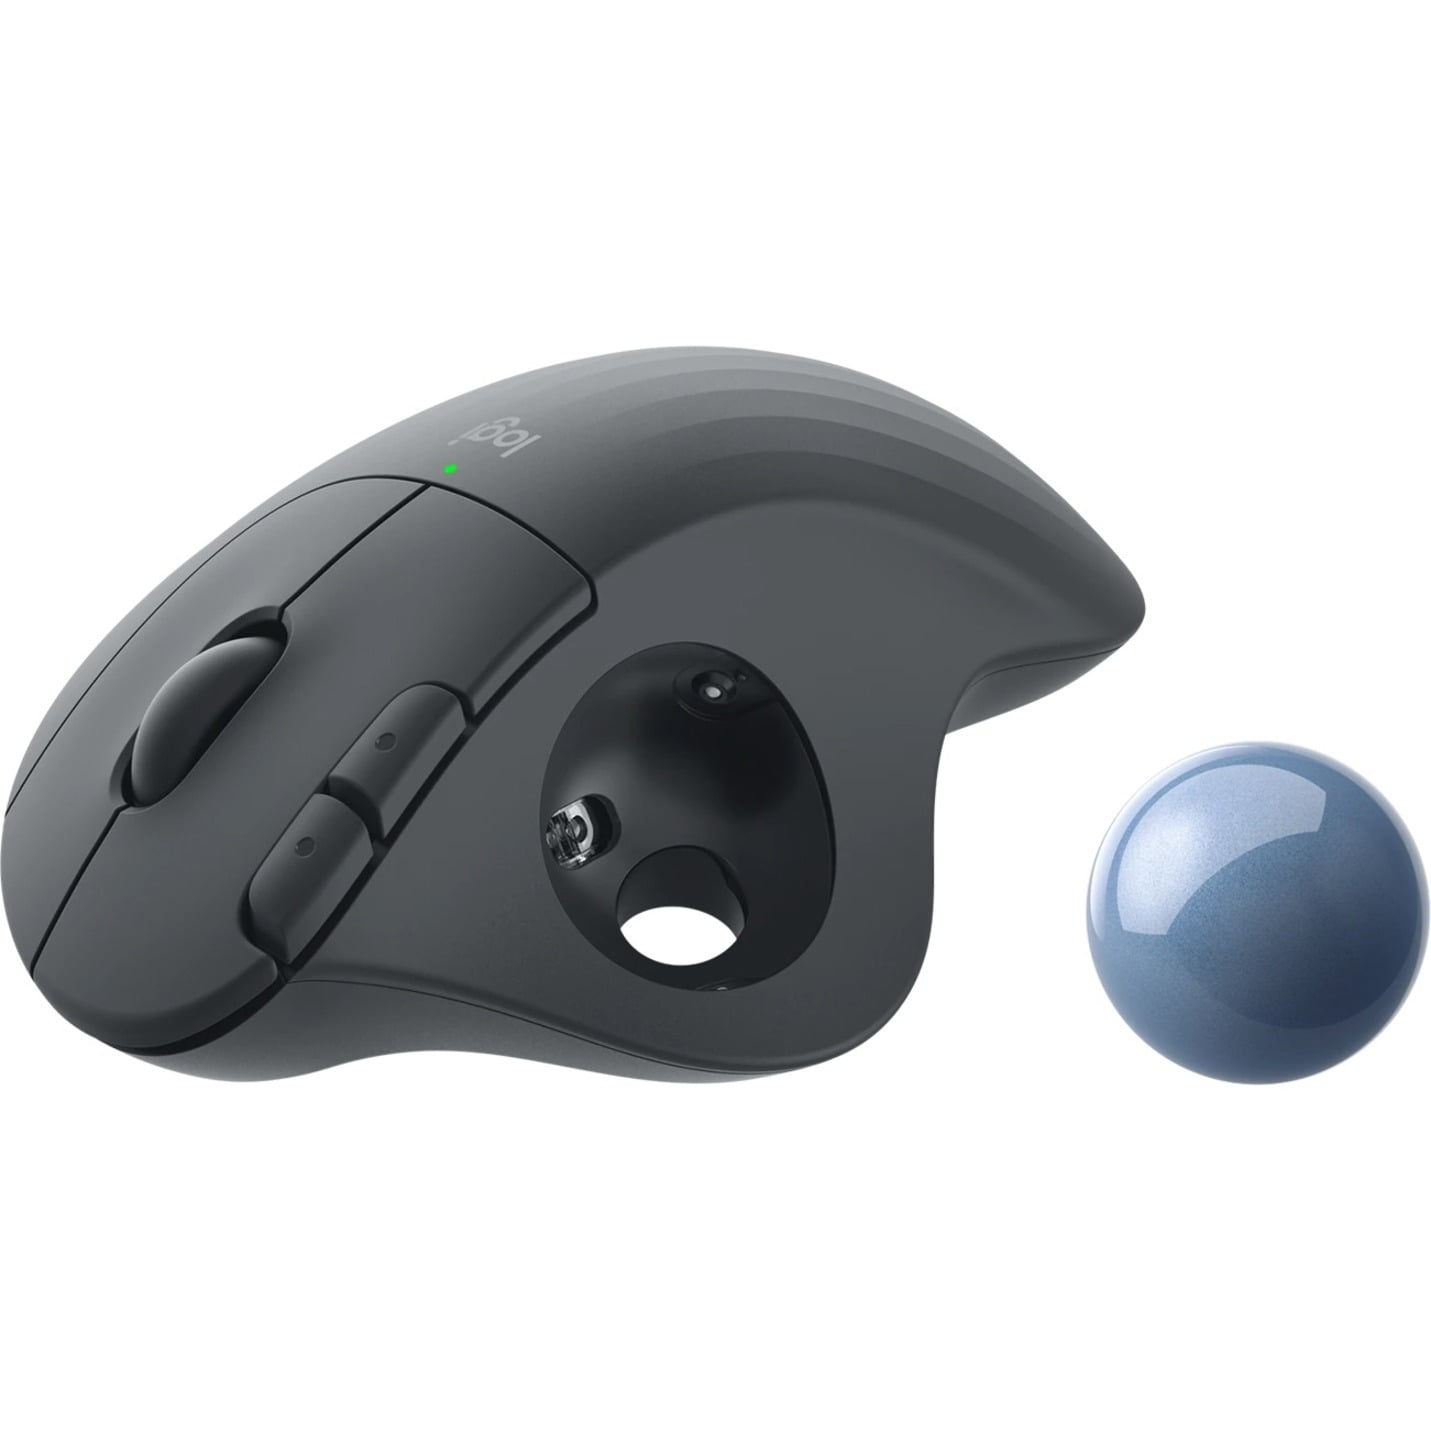 Logitech 910-005138 - MX Master 2S Wireless Mouse Light Grey 